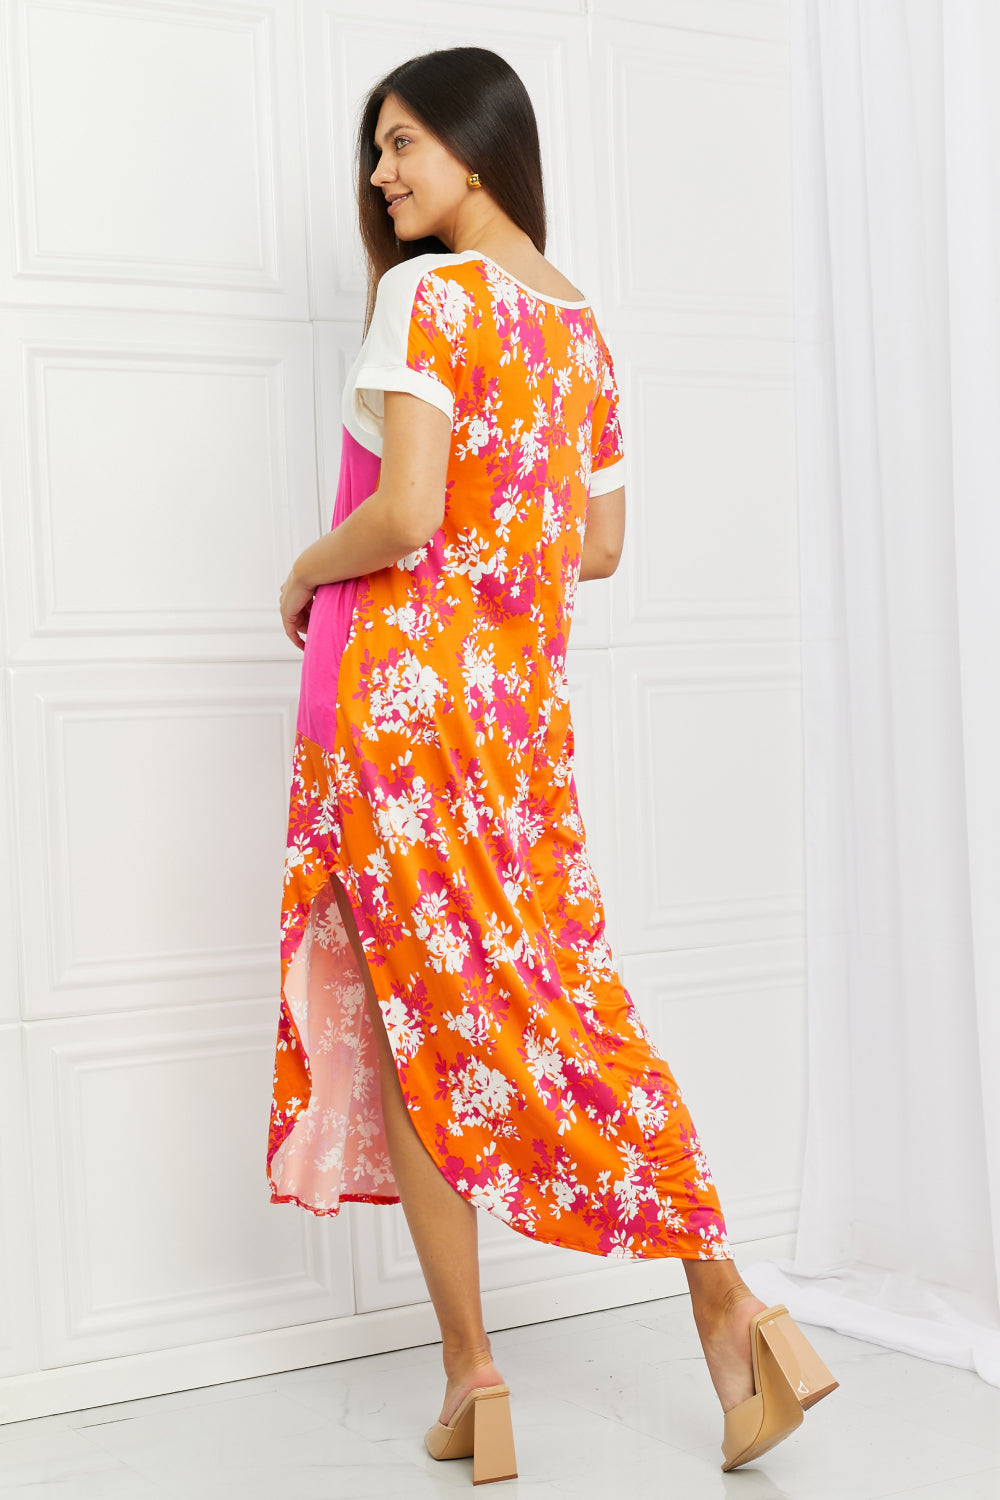 Celeste Spring Forward Full Size Color Block Midi Dress in Ivory/Fuchsia